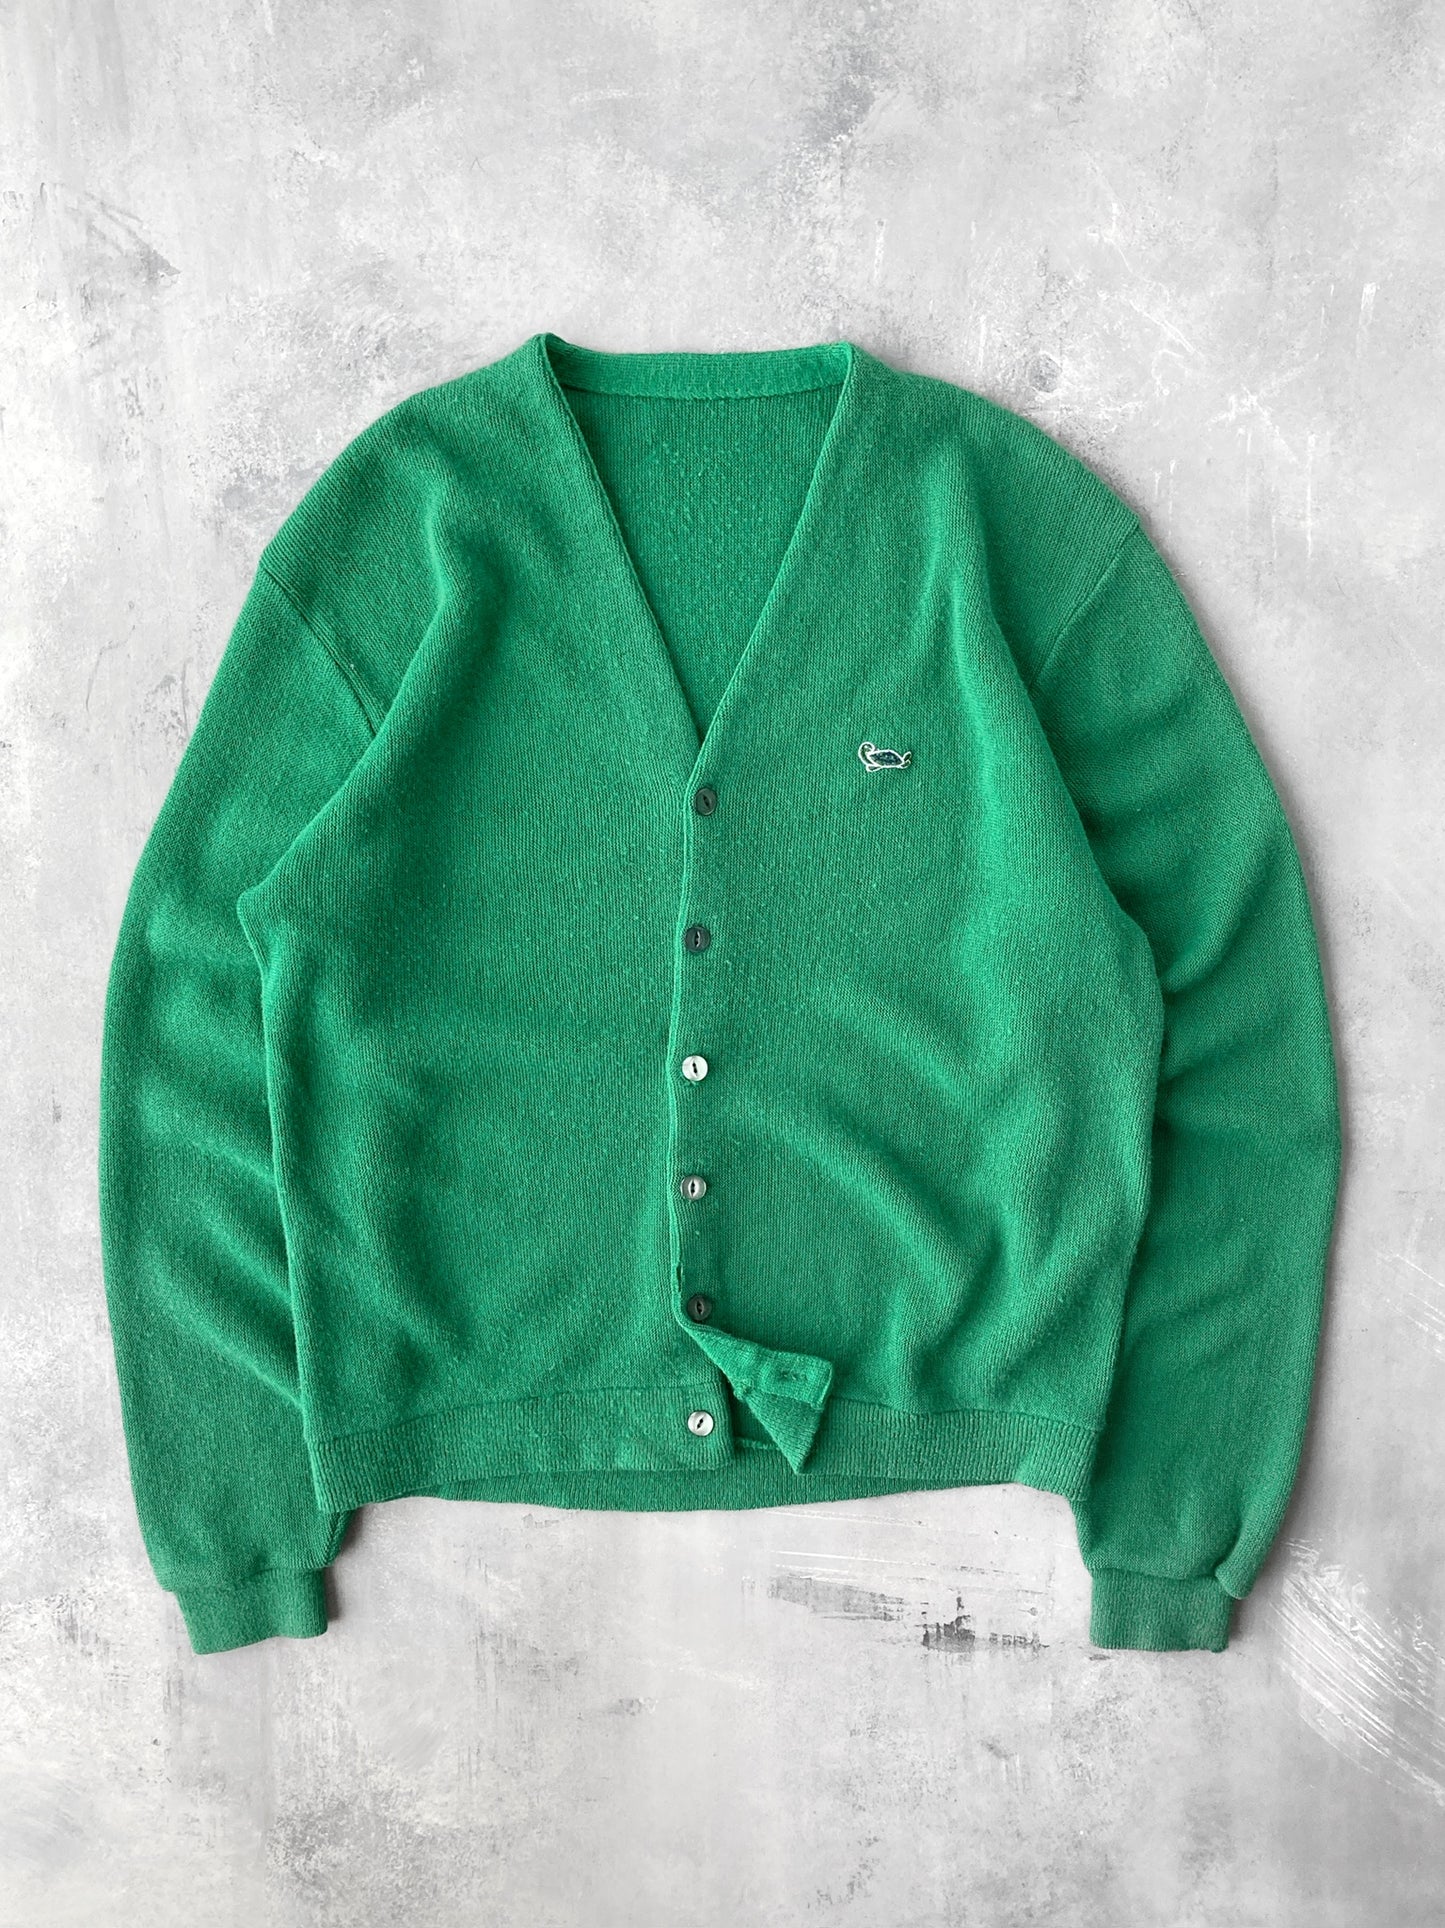 Green V-Neck Cardigan Sweater 70's - Medium / Large